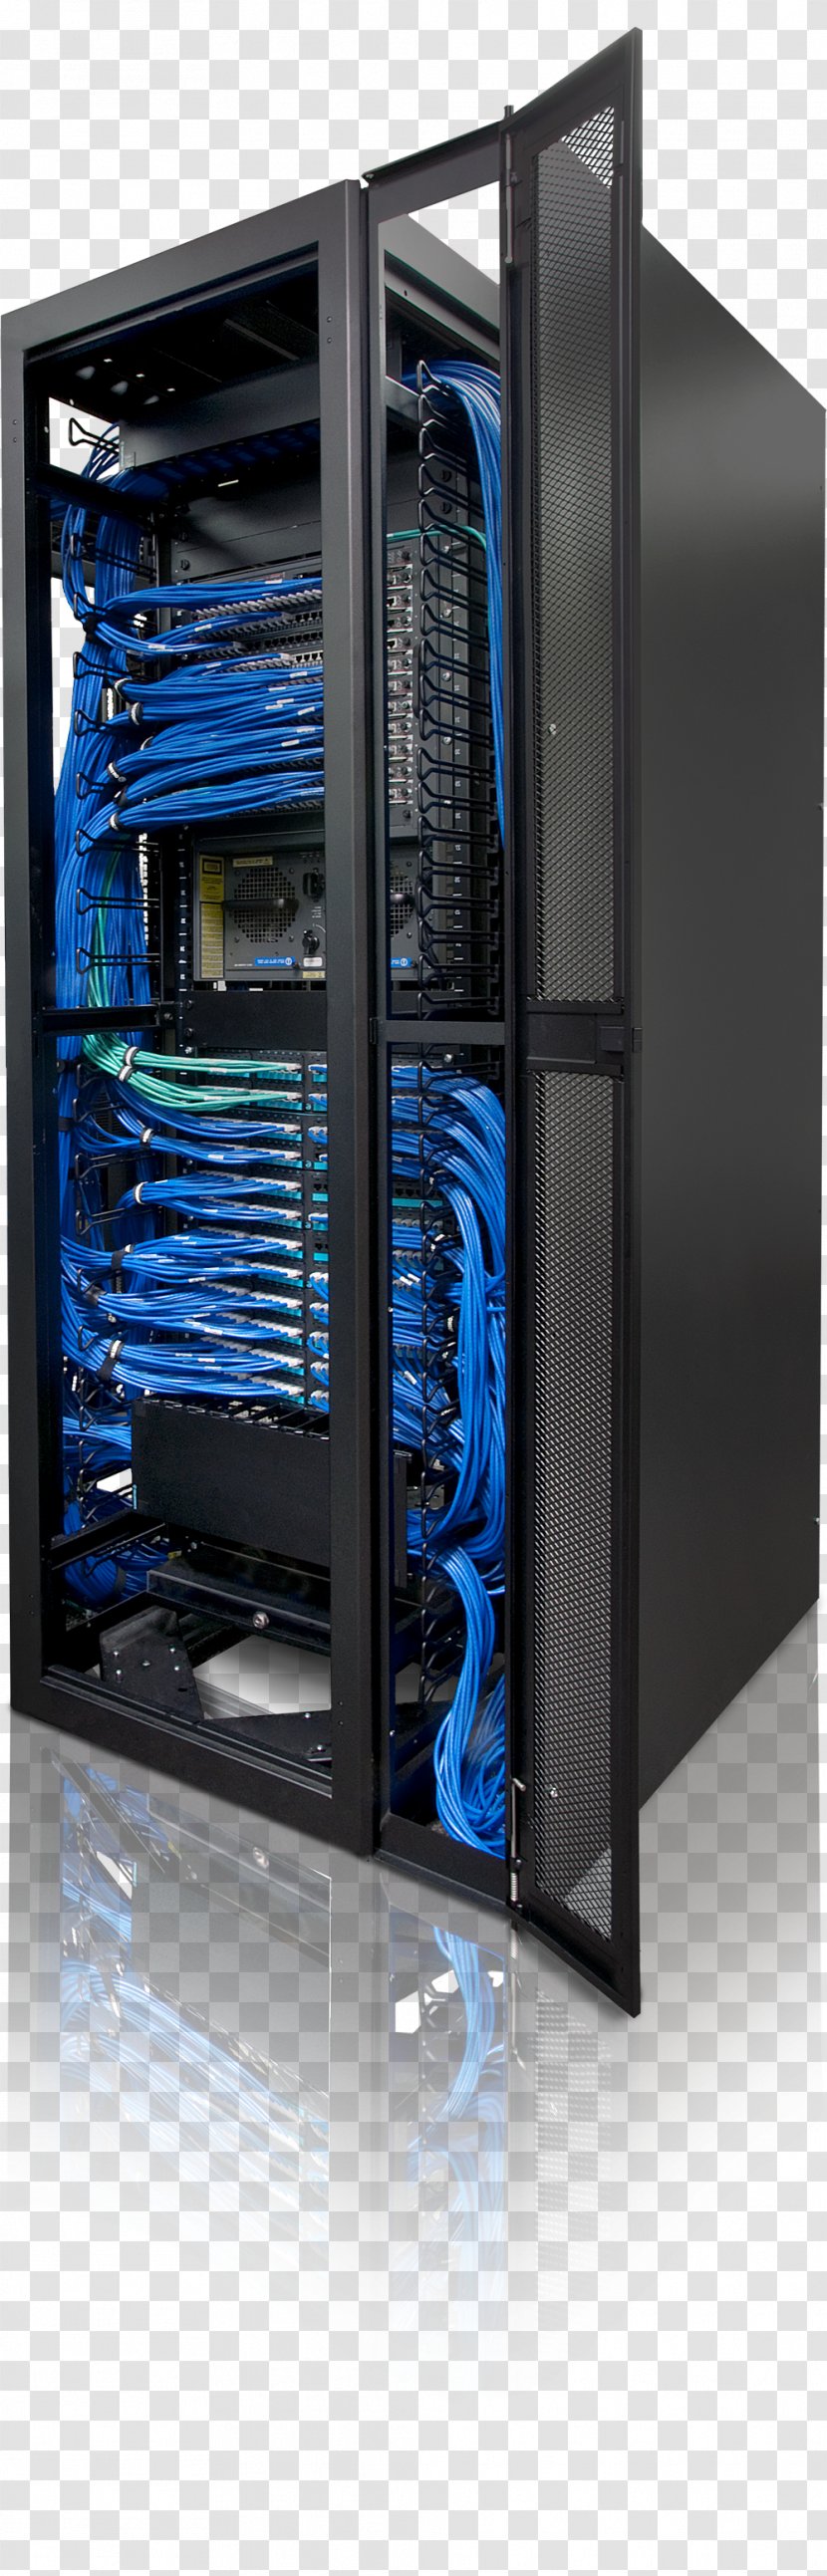 Computer Cases & Housings Electrical Enclosure Hardware Servers 19-inch Rack - Electrol Transparent PNG